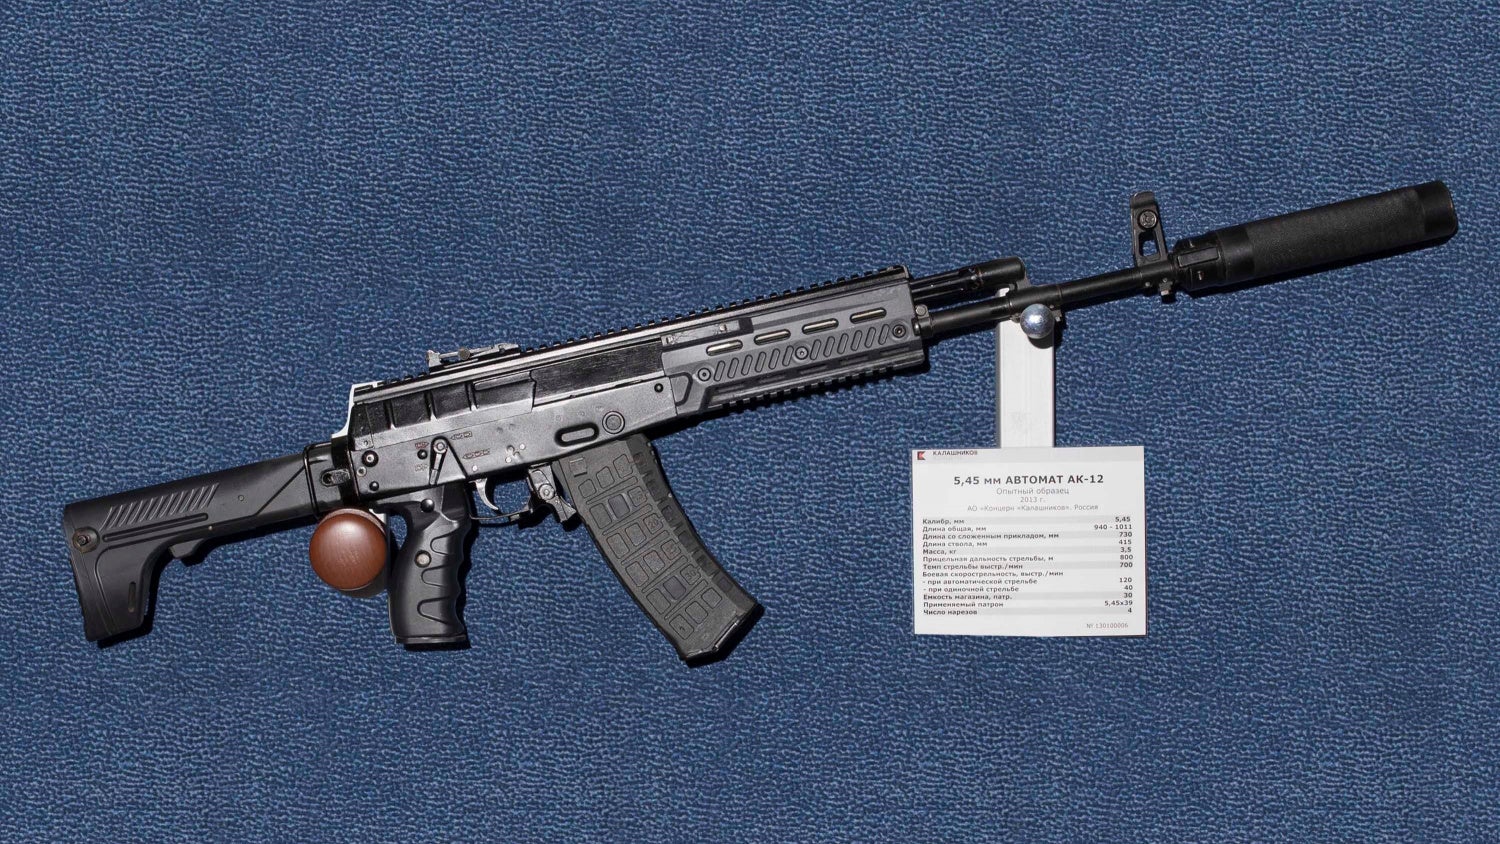 AK-12 second prototype in Kalashnikov factory museum